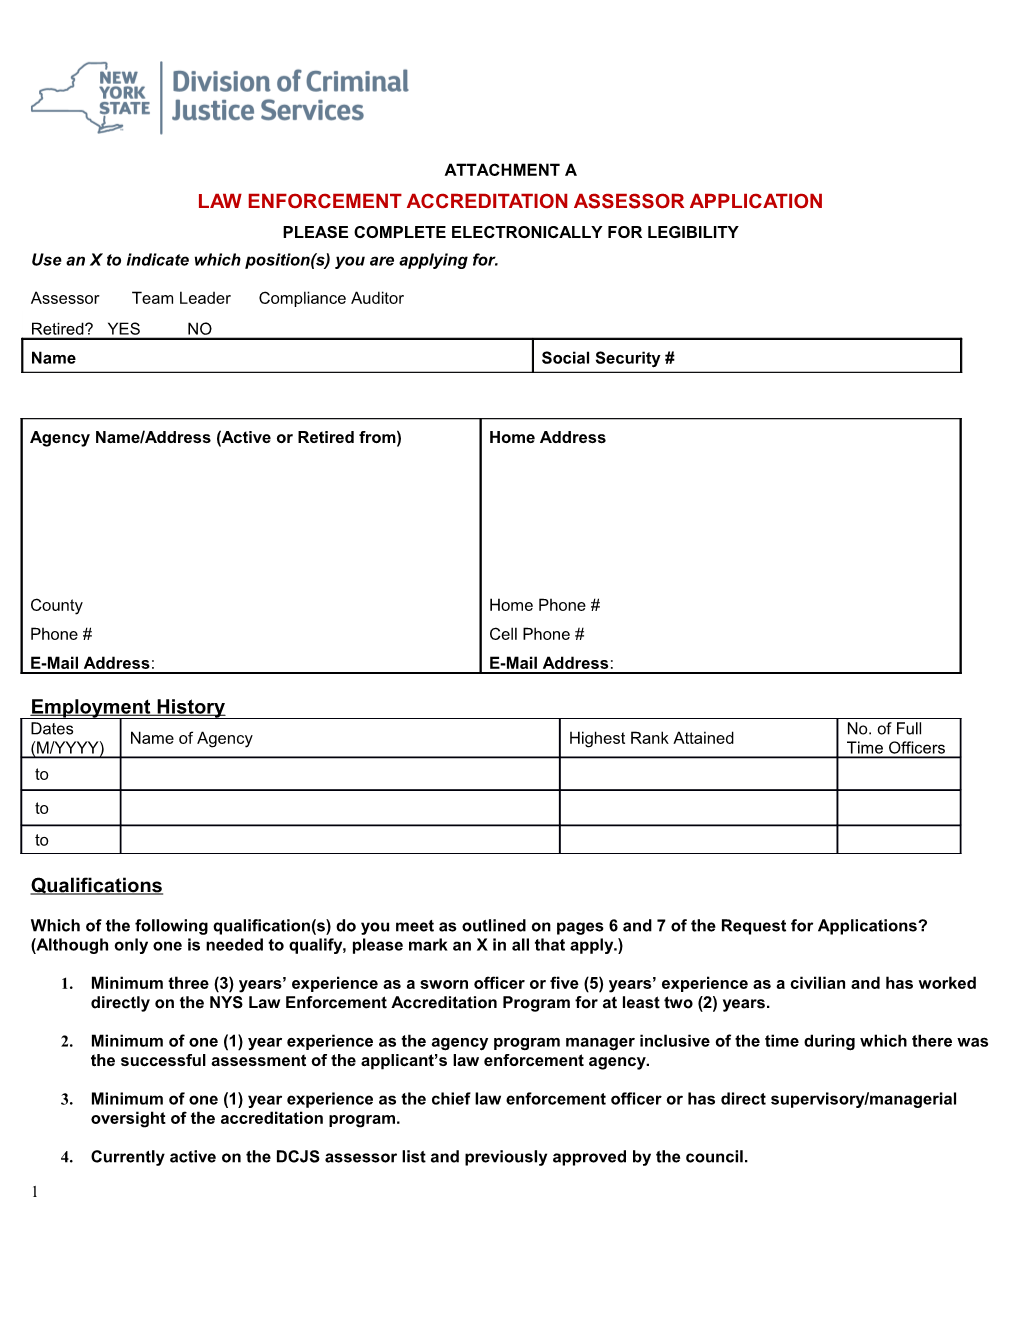 Law Enforcement Accreditation Assessor Application